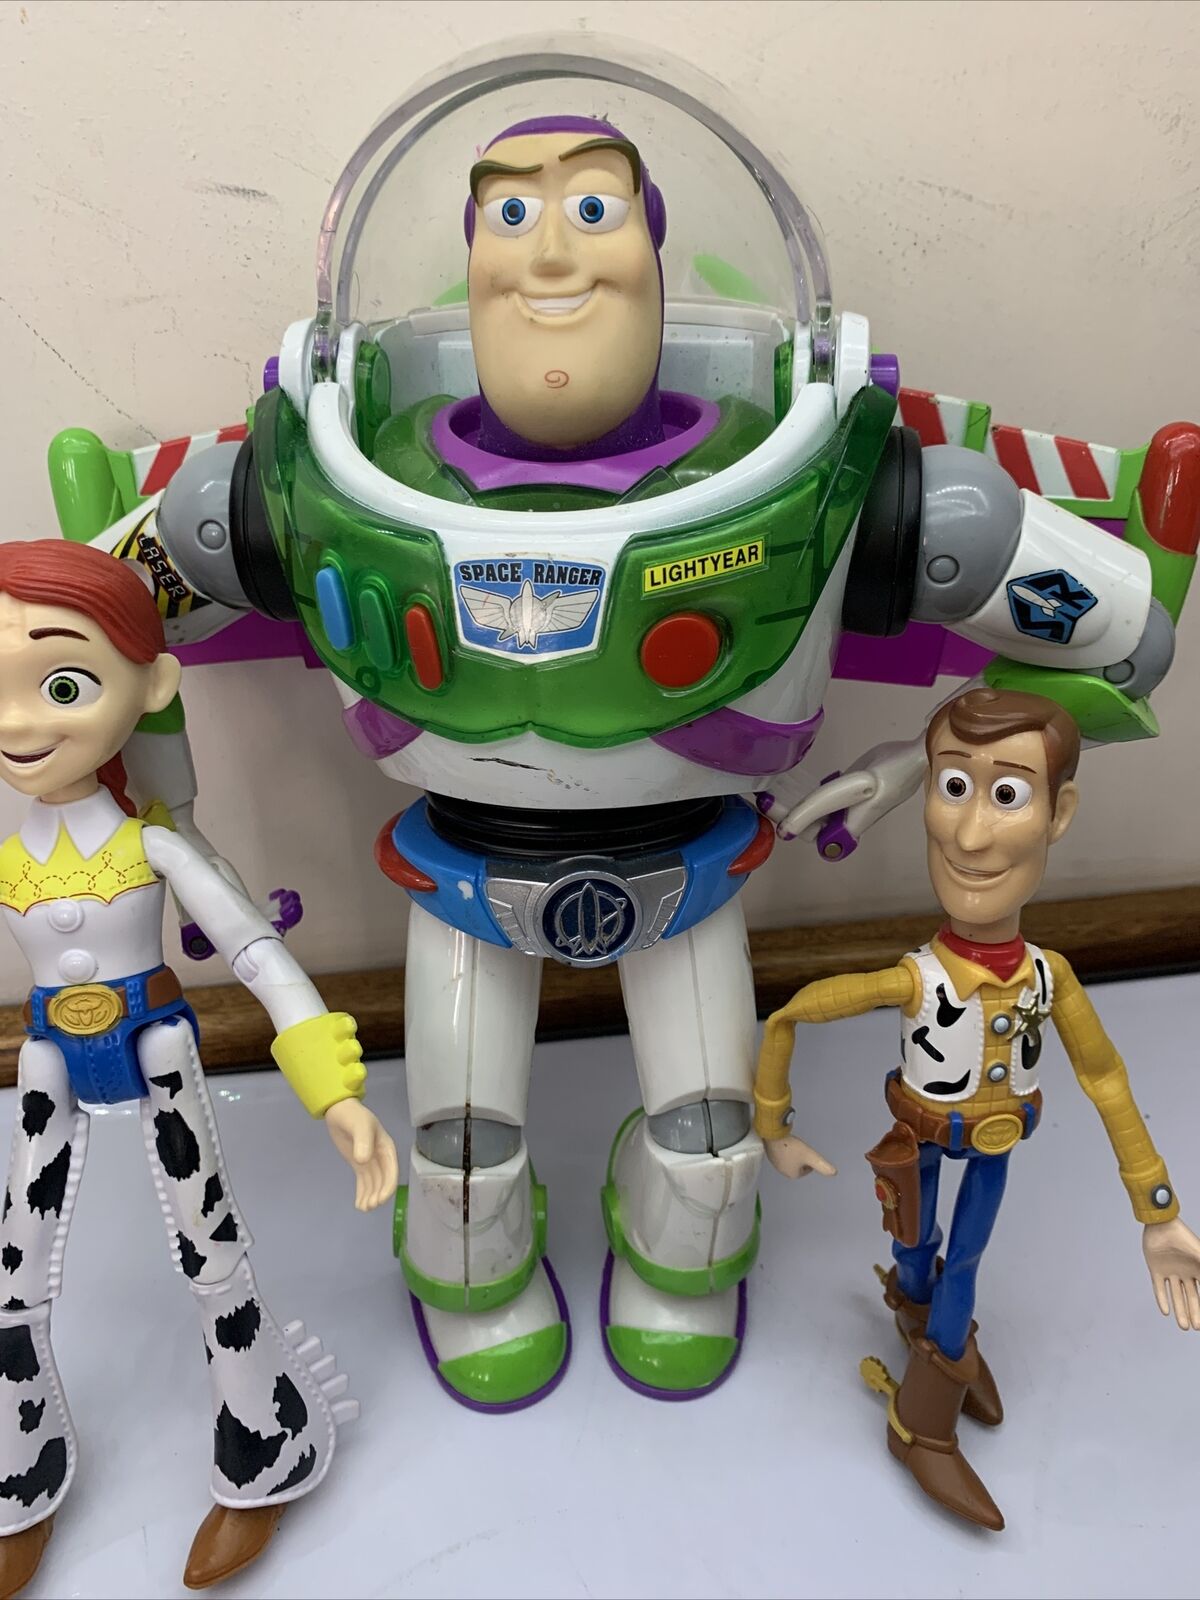 3x Toy Story Figure Buzz Lightyear Blue Belt Woody Jessie Disney Pixar Mattel